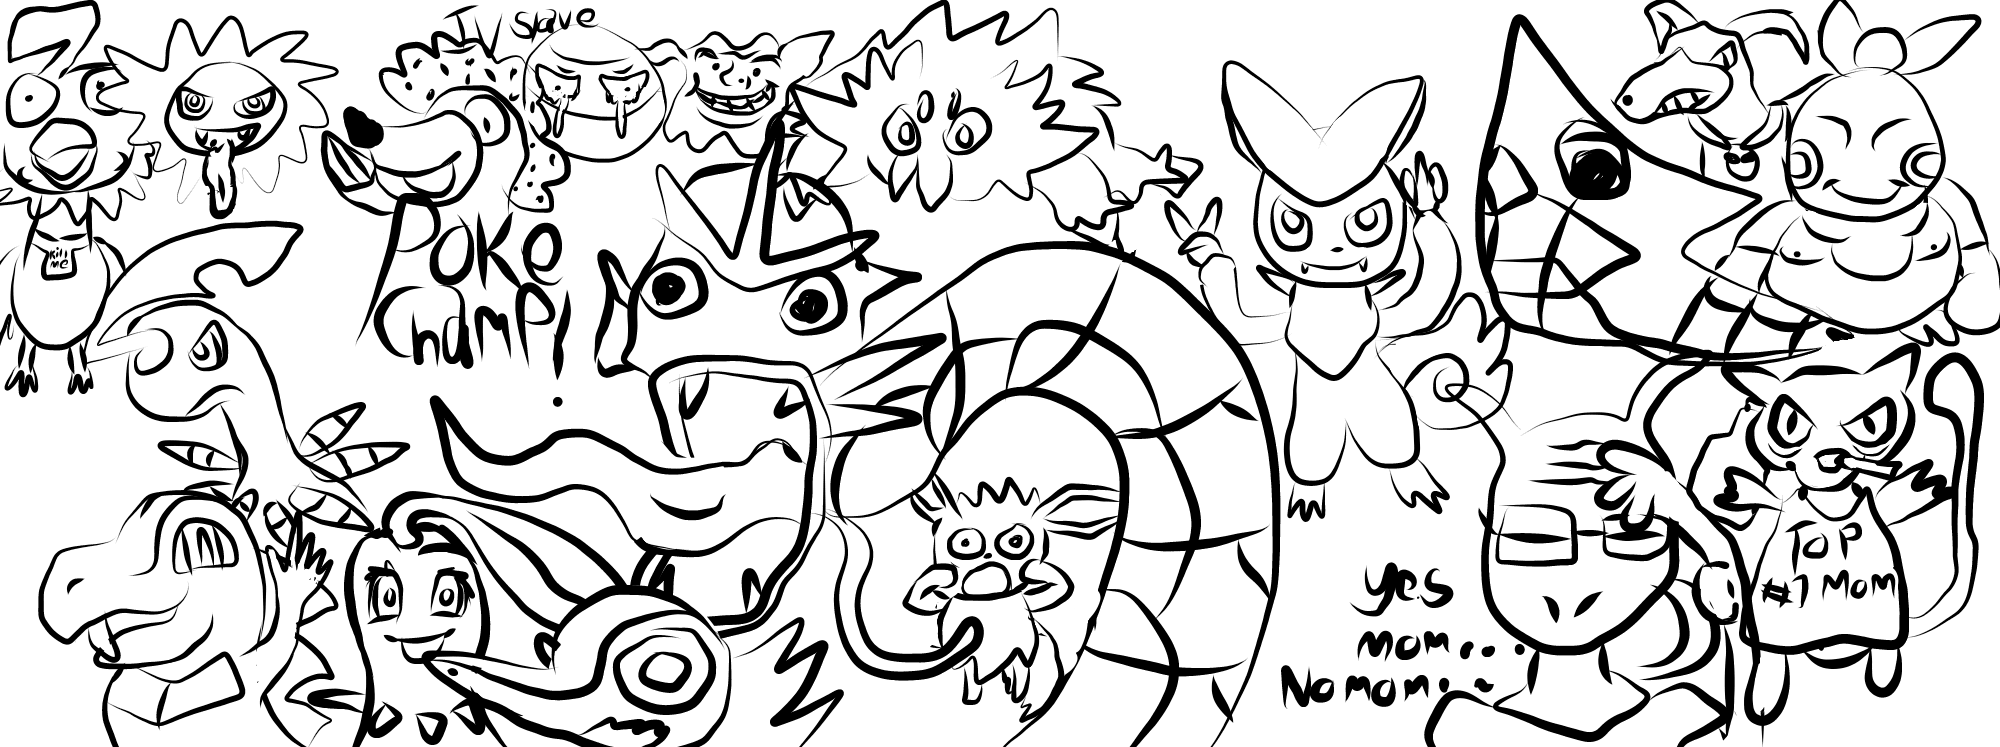 Badly drawn pokemon